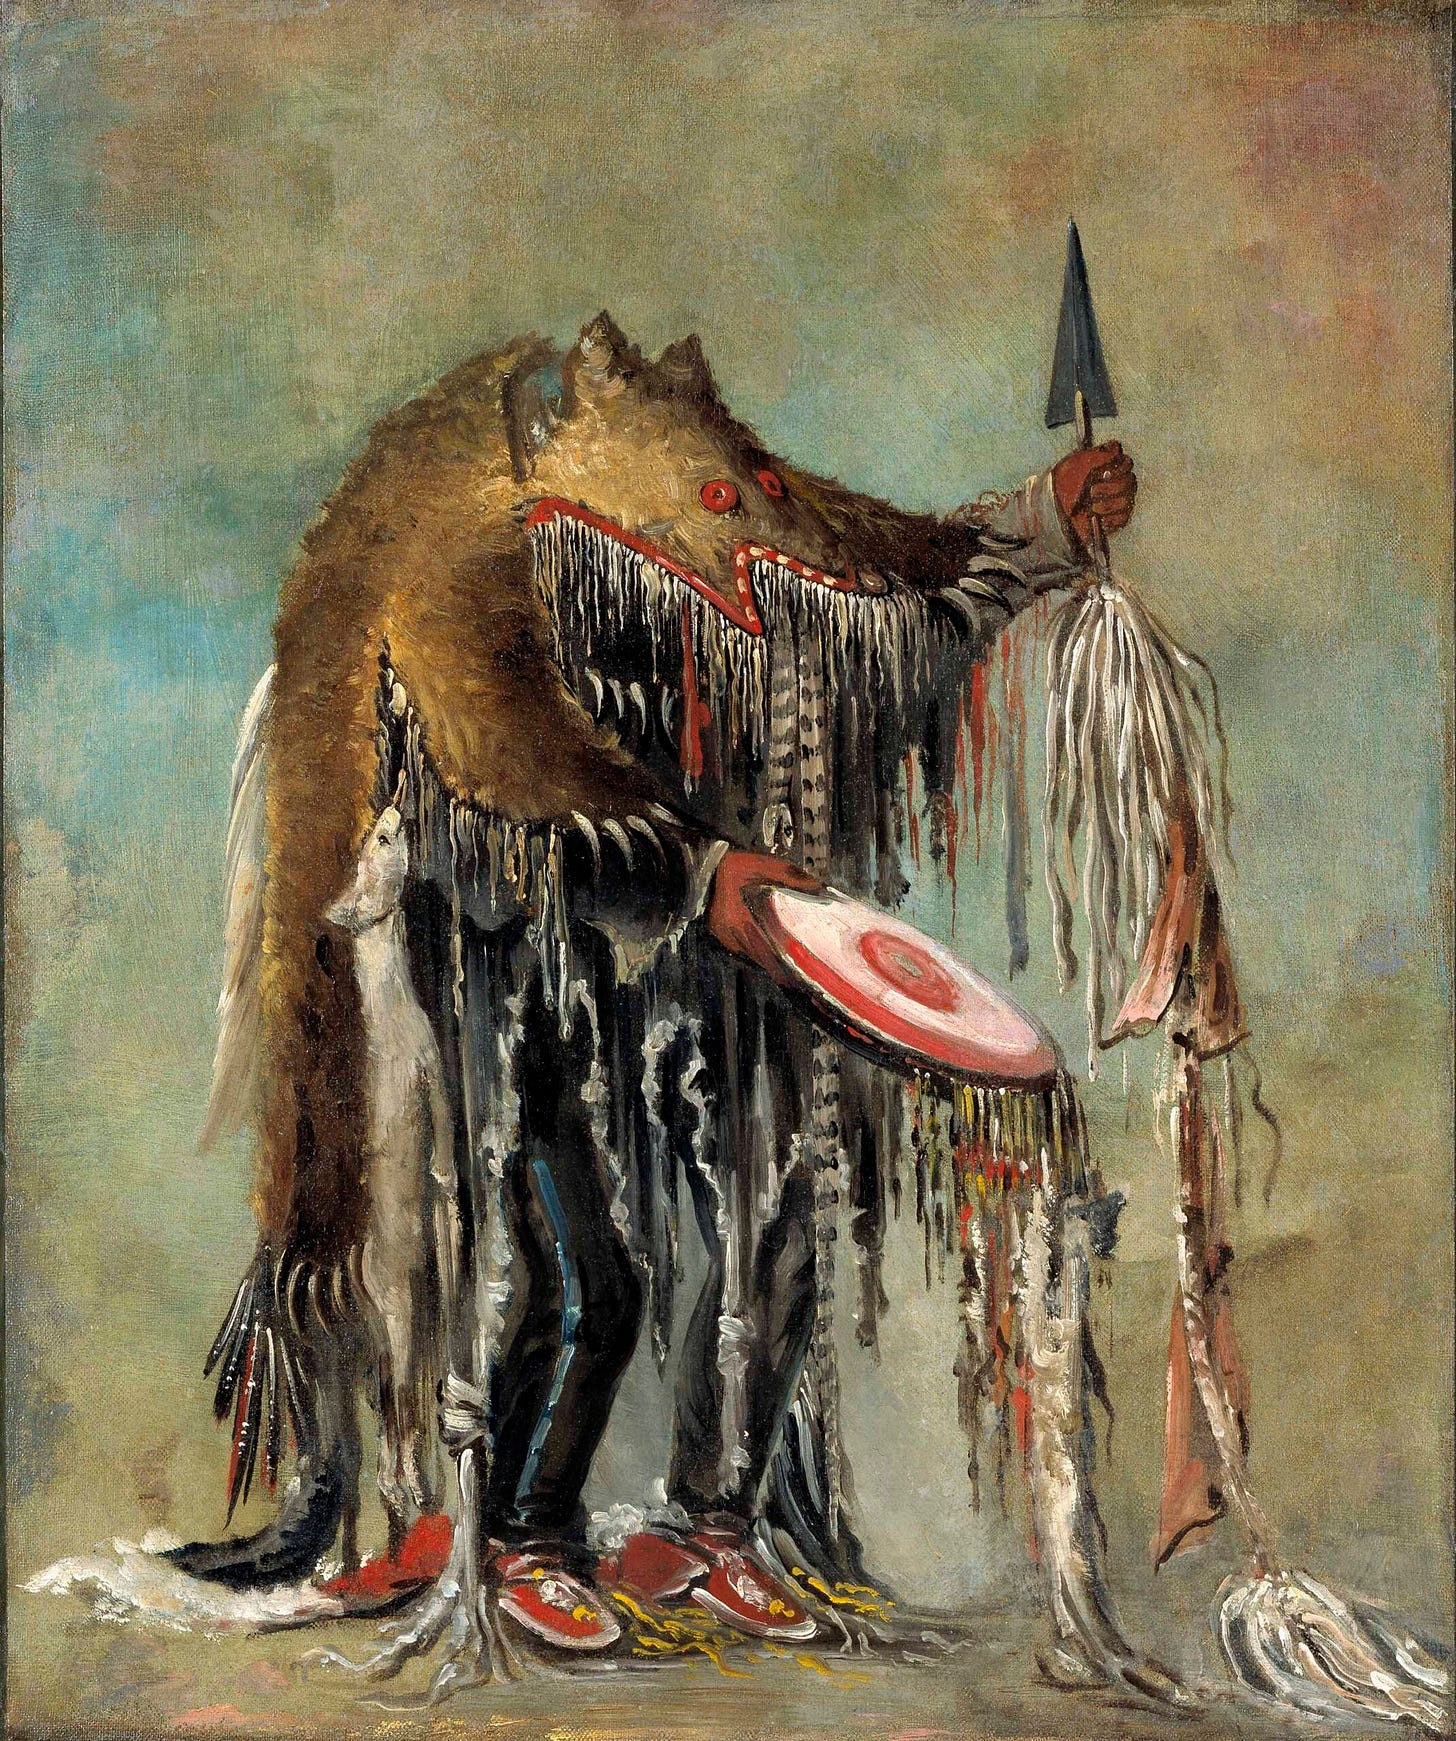 The Portrayal of the Native American Medicine Man or Shaman – Art Hx:  Visual and Medical Legacies of British Colonialism